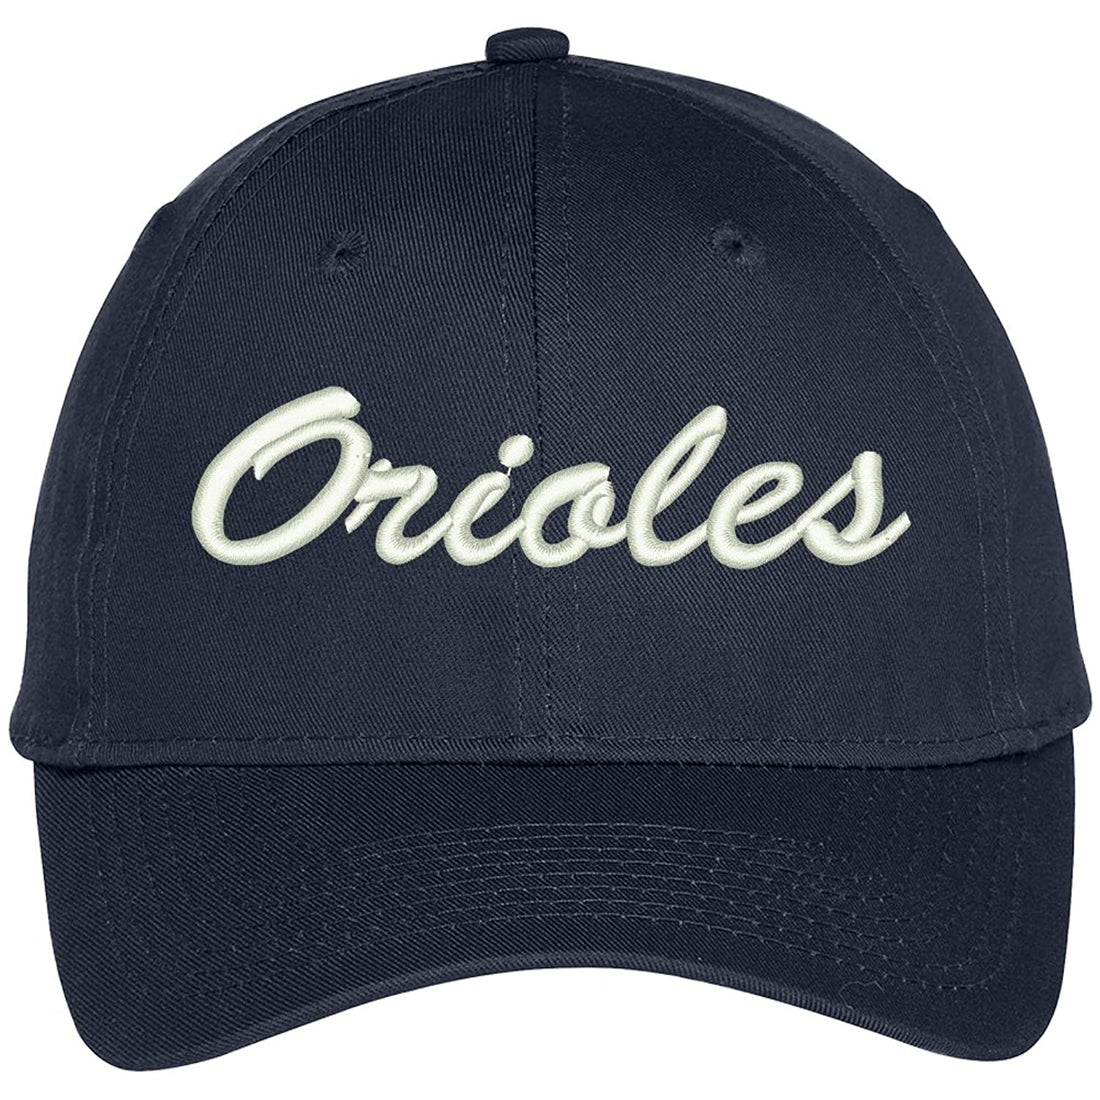 Trendy Apparel Shop Orioles Embroidered Precurved Adjustable Cap